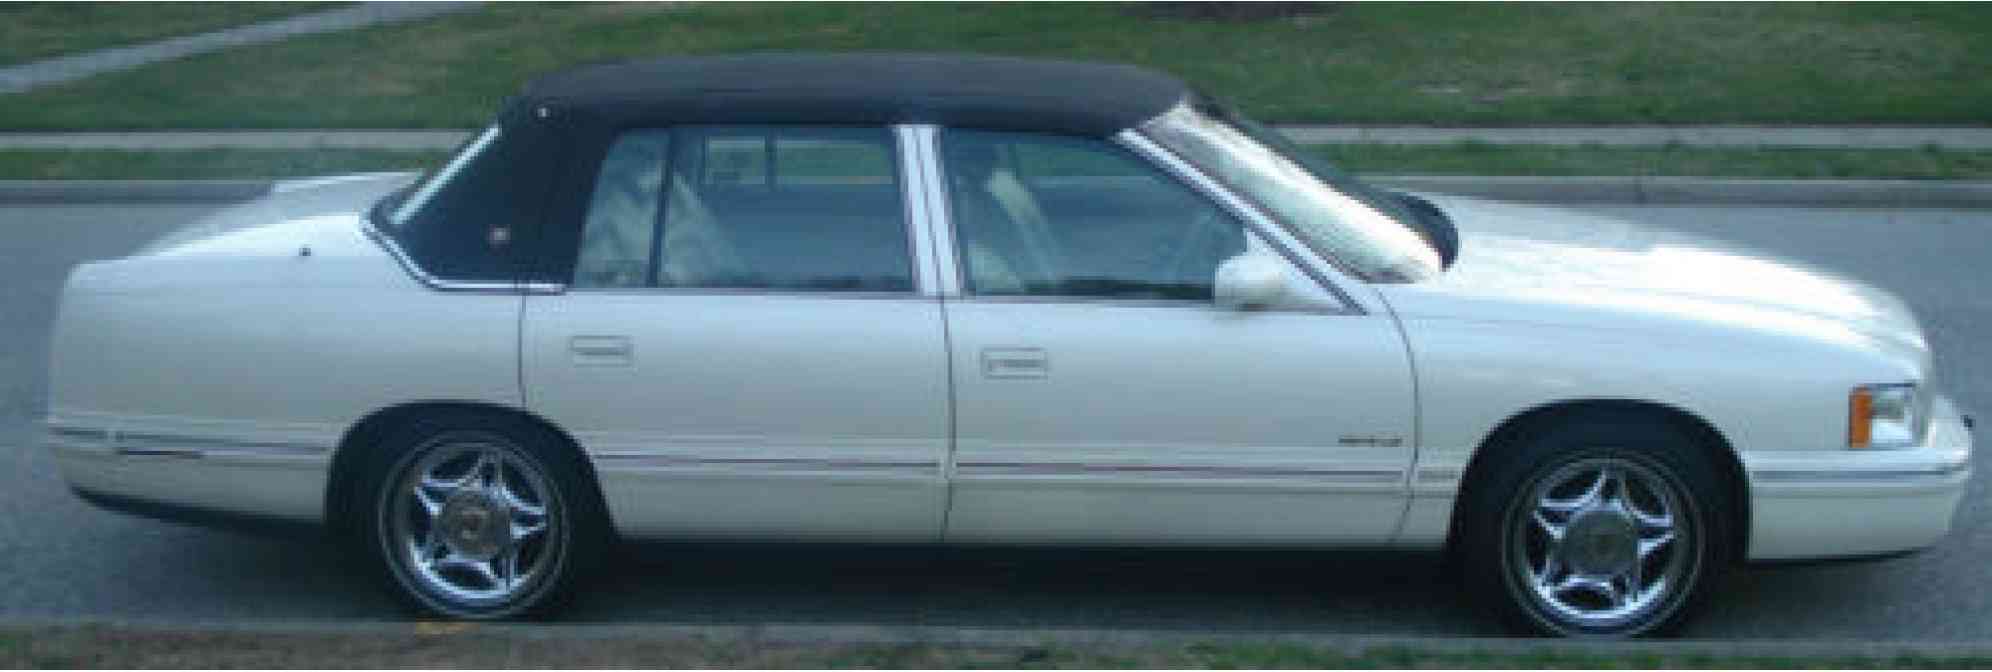 Cadillac DeVille ESTATE SALE! (1999)